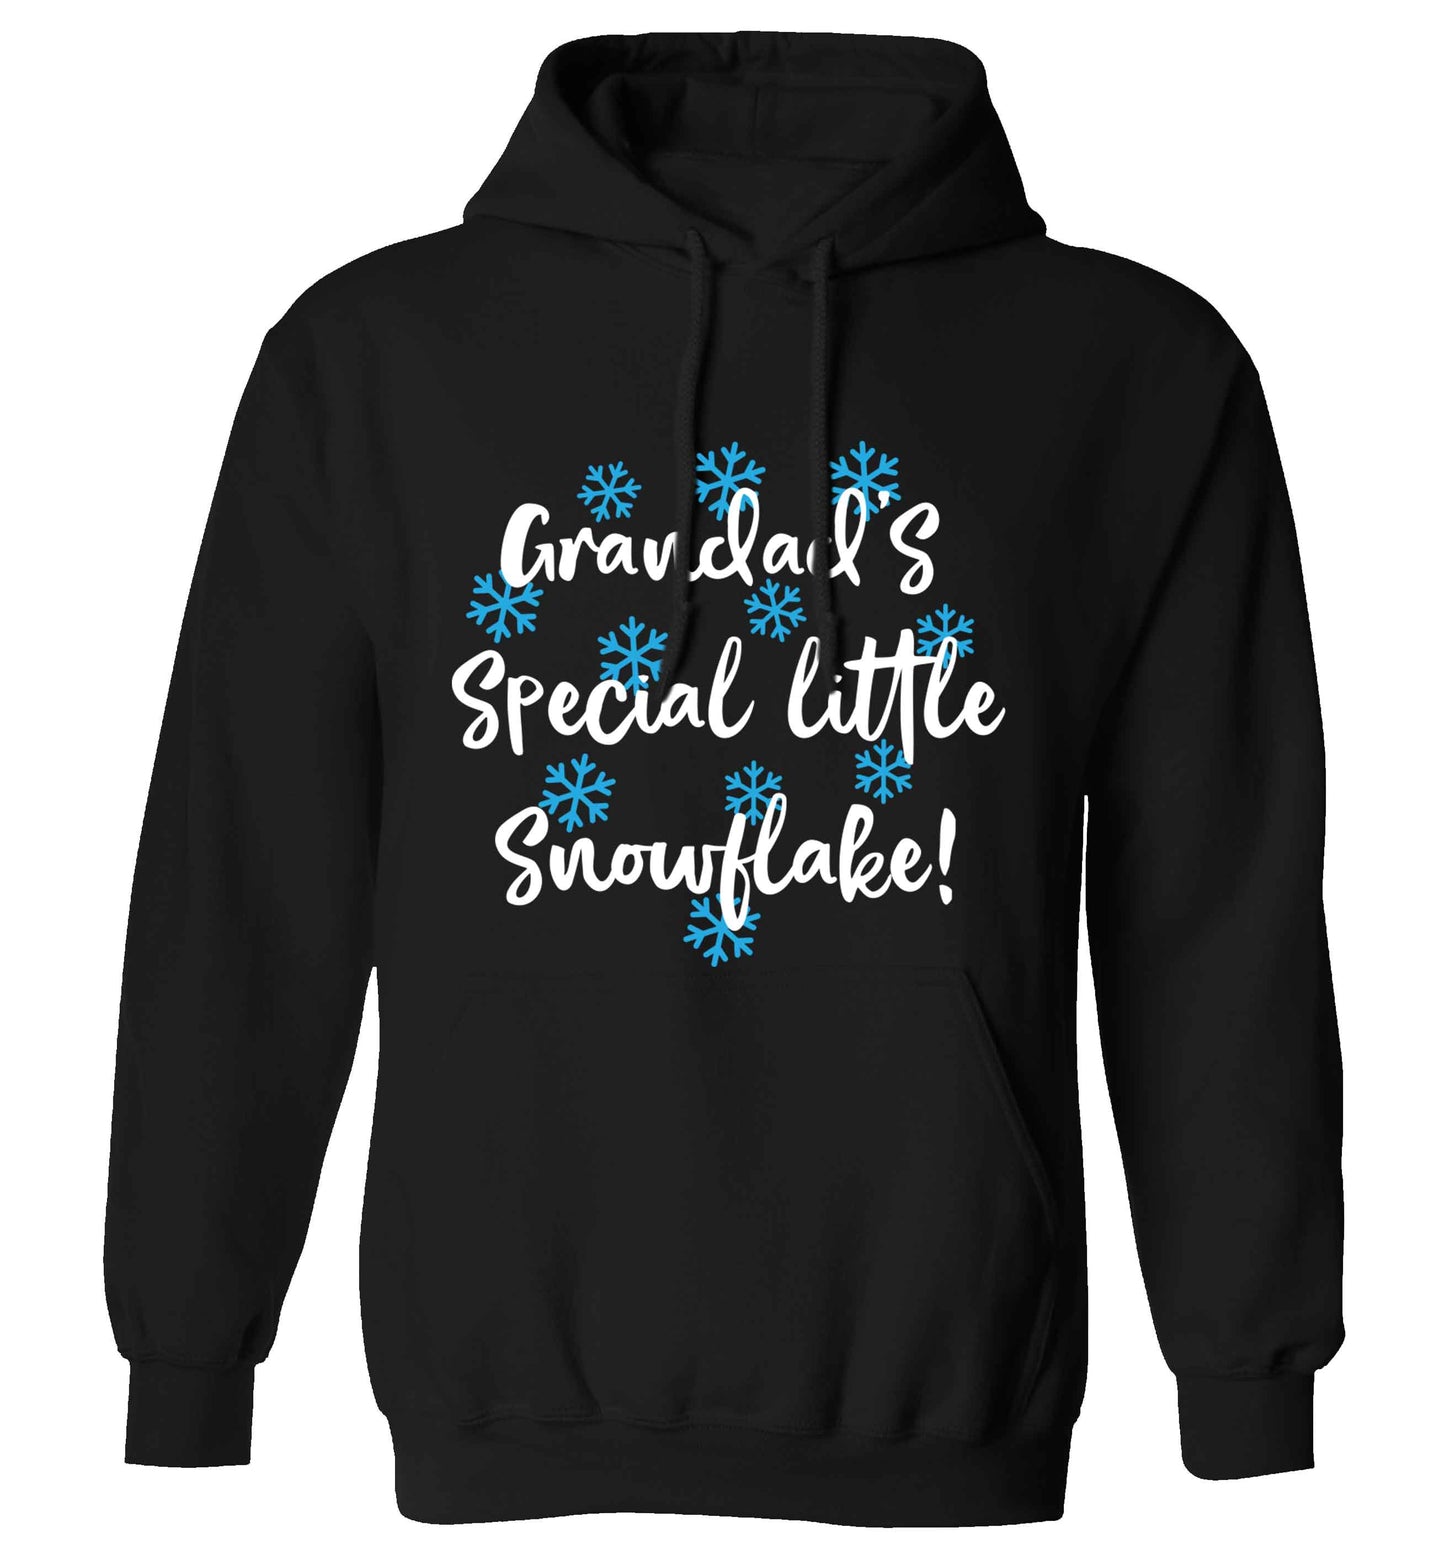 Grandad's special little snowflake adults unisex black hoodie 2XL